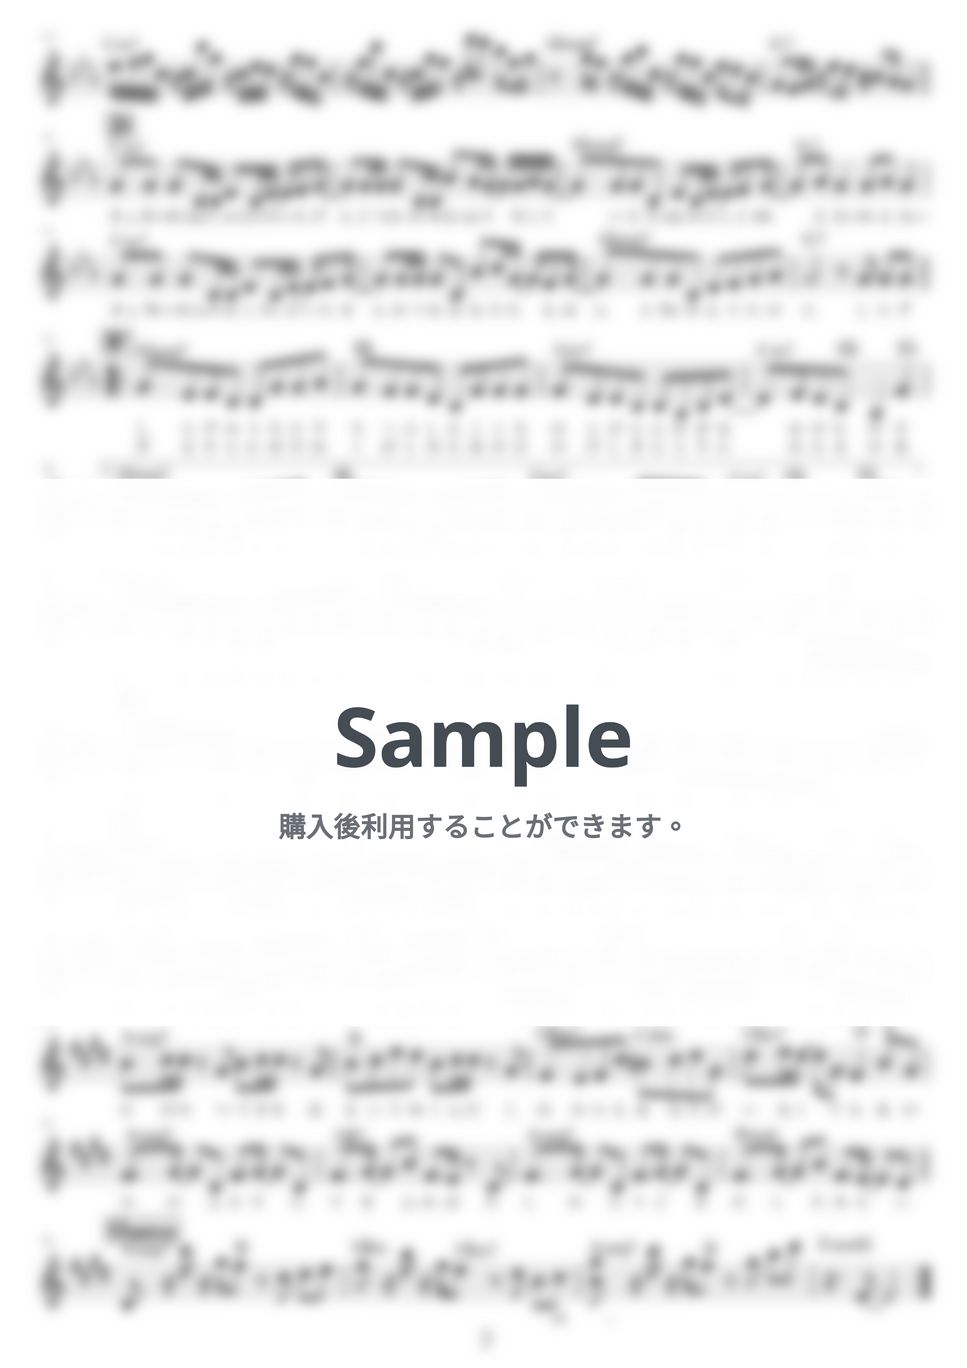 YOASOBI - ハルジオン by NOTES music